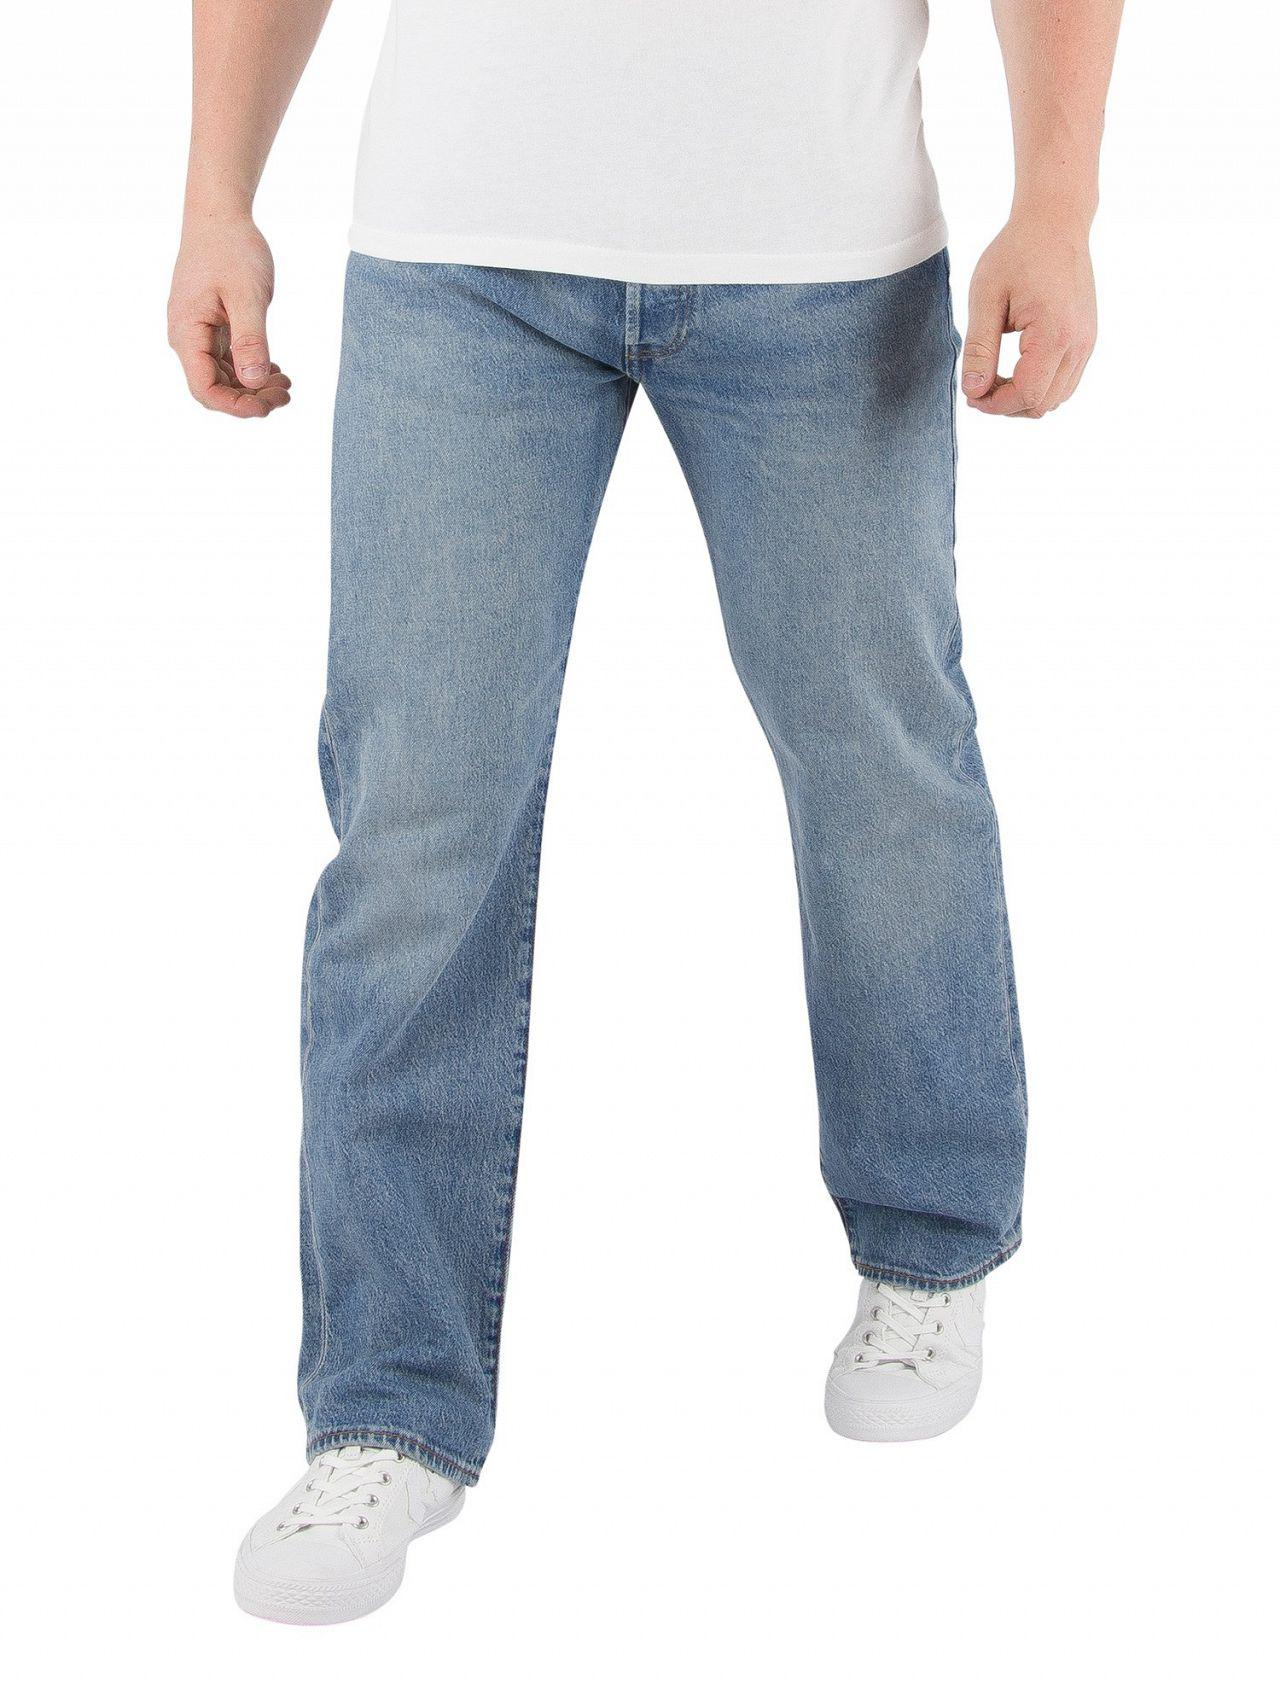 Denim Baywater 501 Original Fit Jeans 